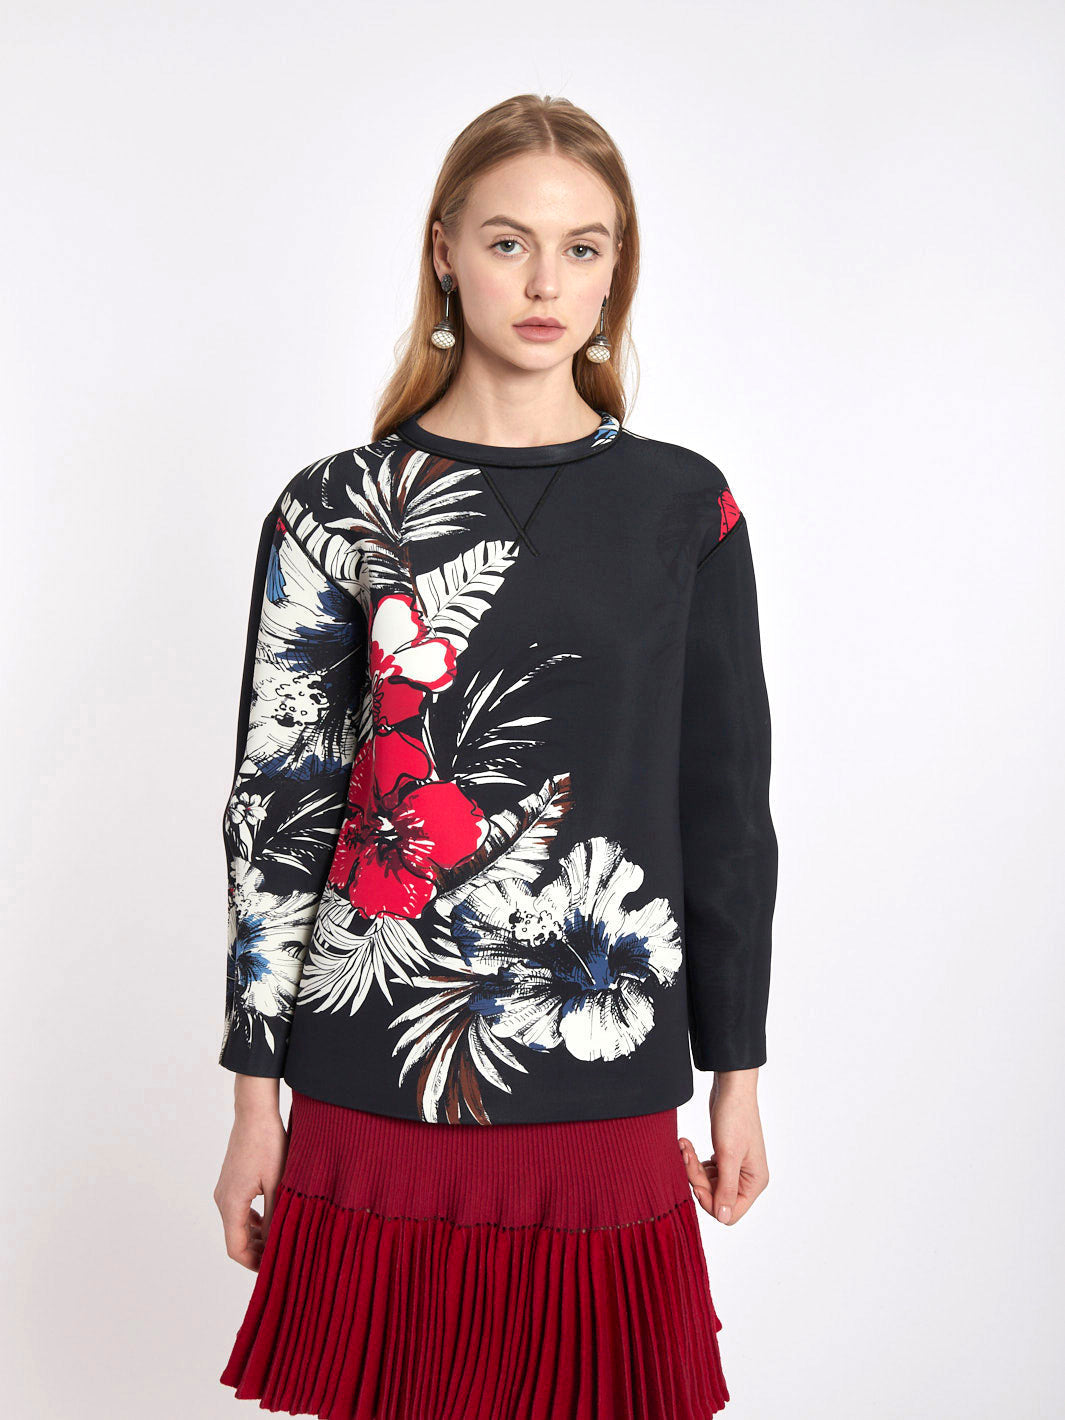 2010 Neoprene Aquilano Rimondi black sweater with floral print